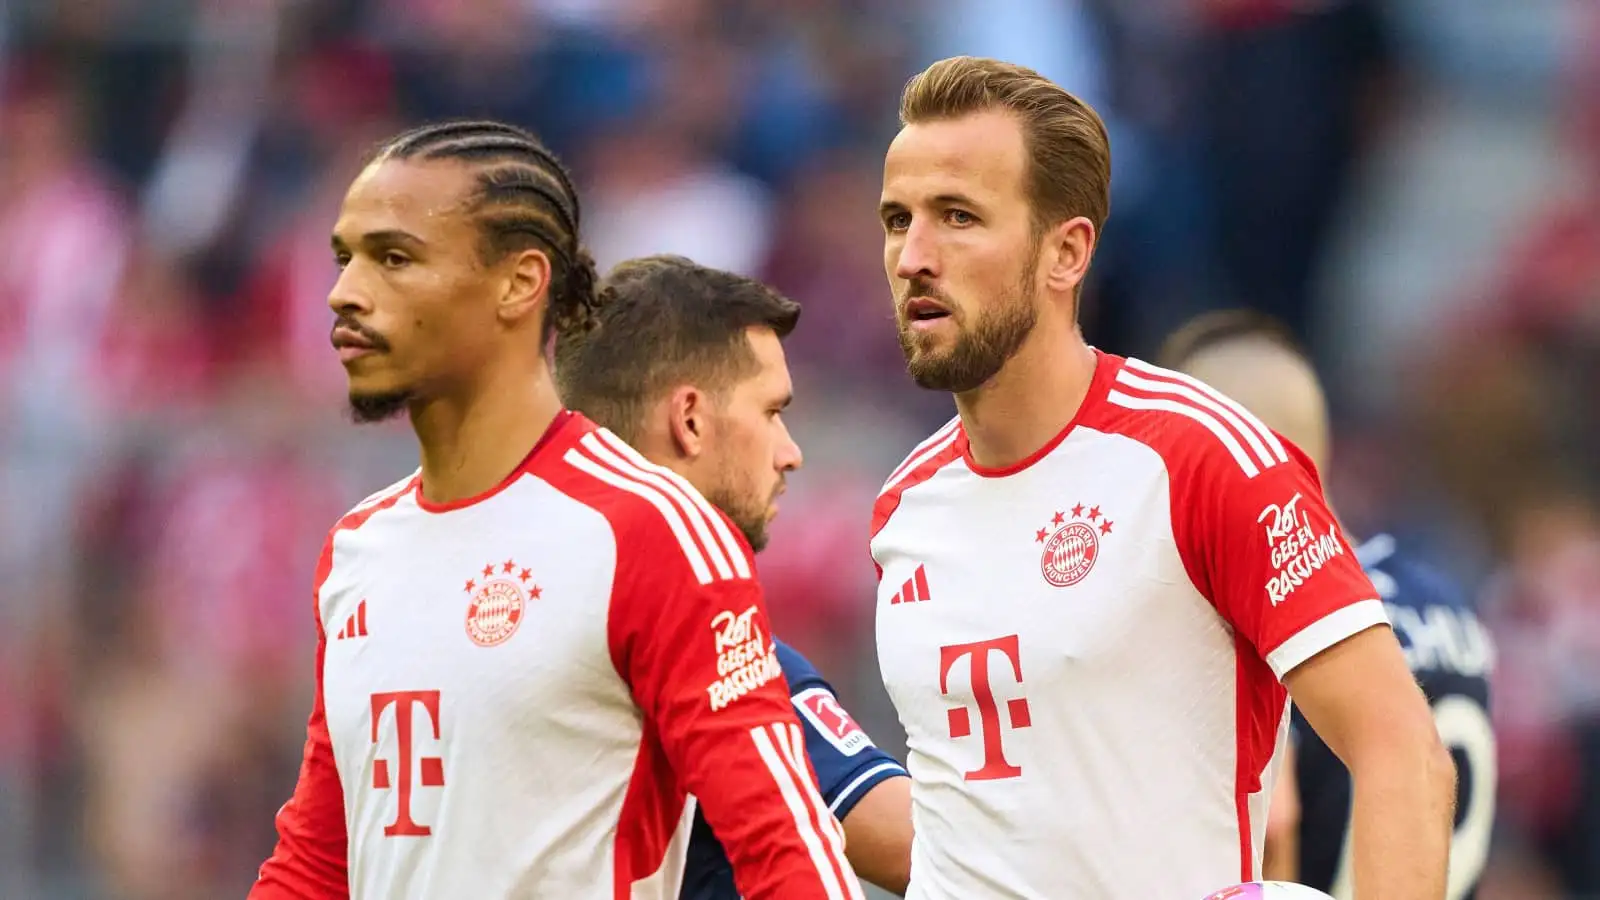 Bayern Munich forwards Leroy Sane and Harry Kane